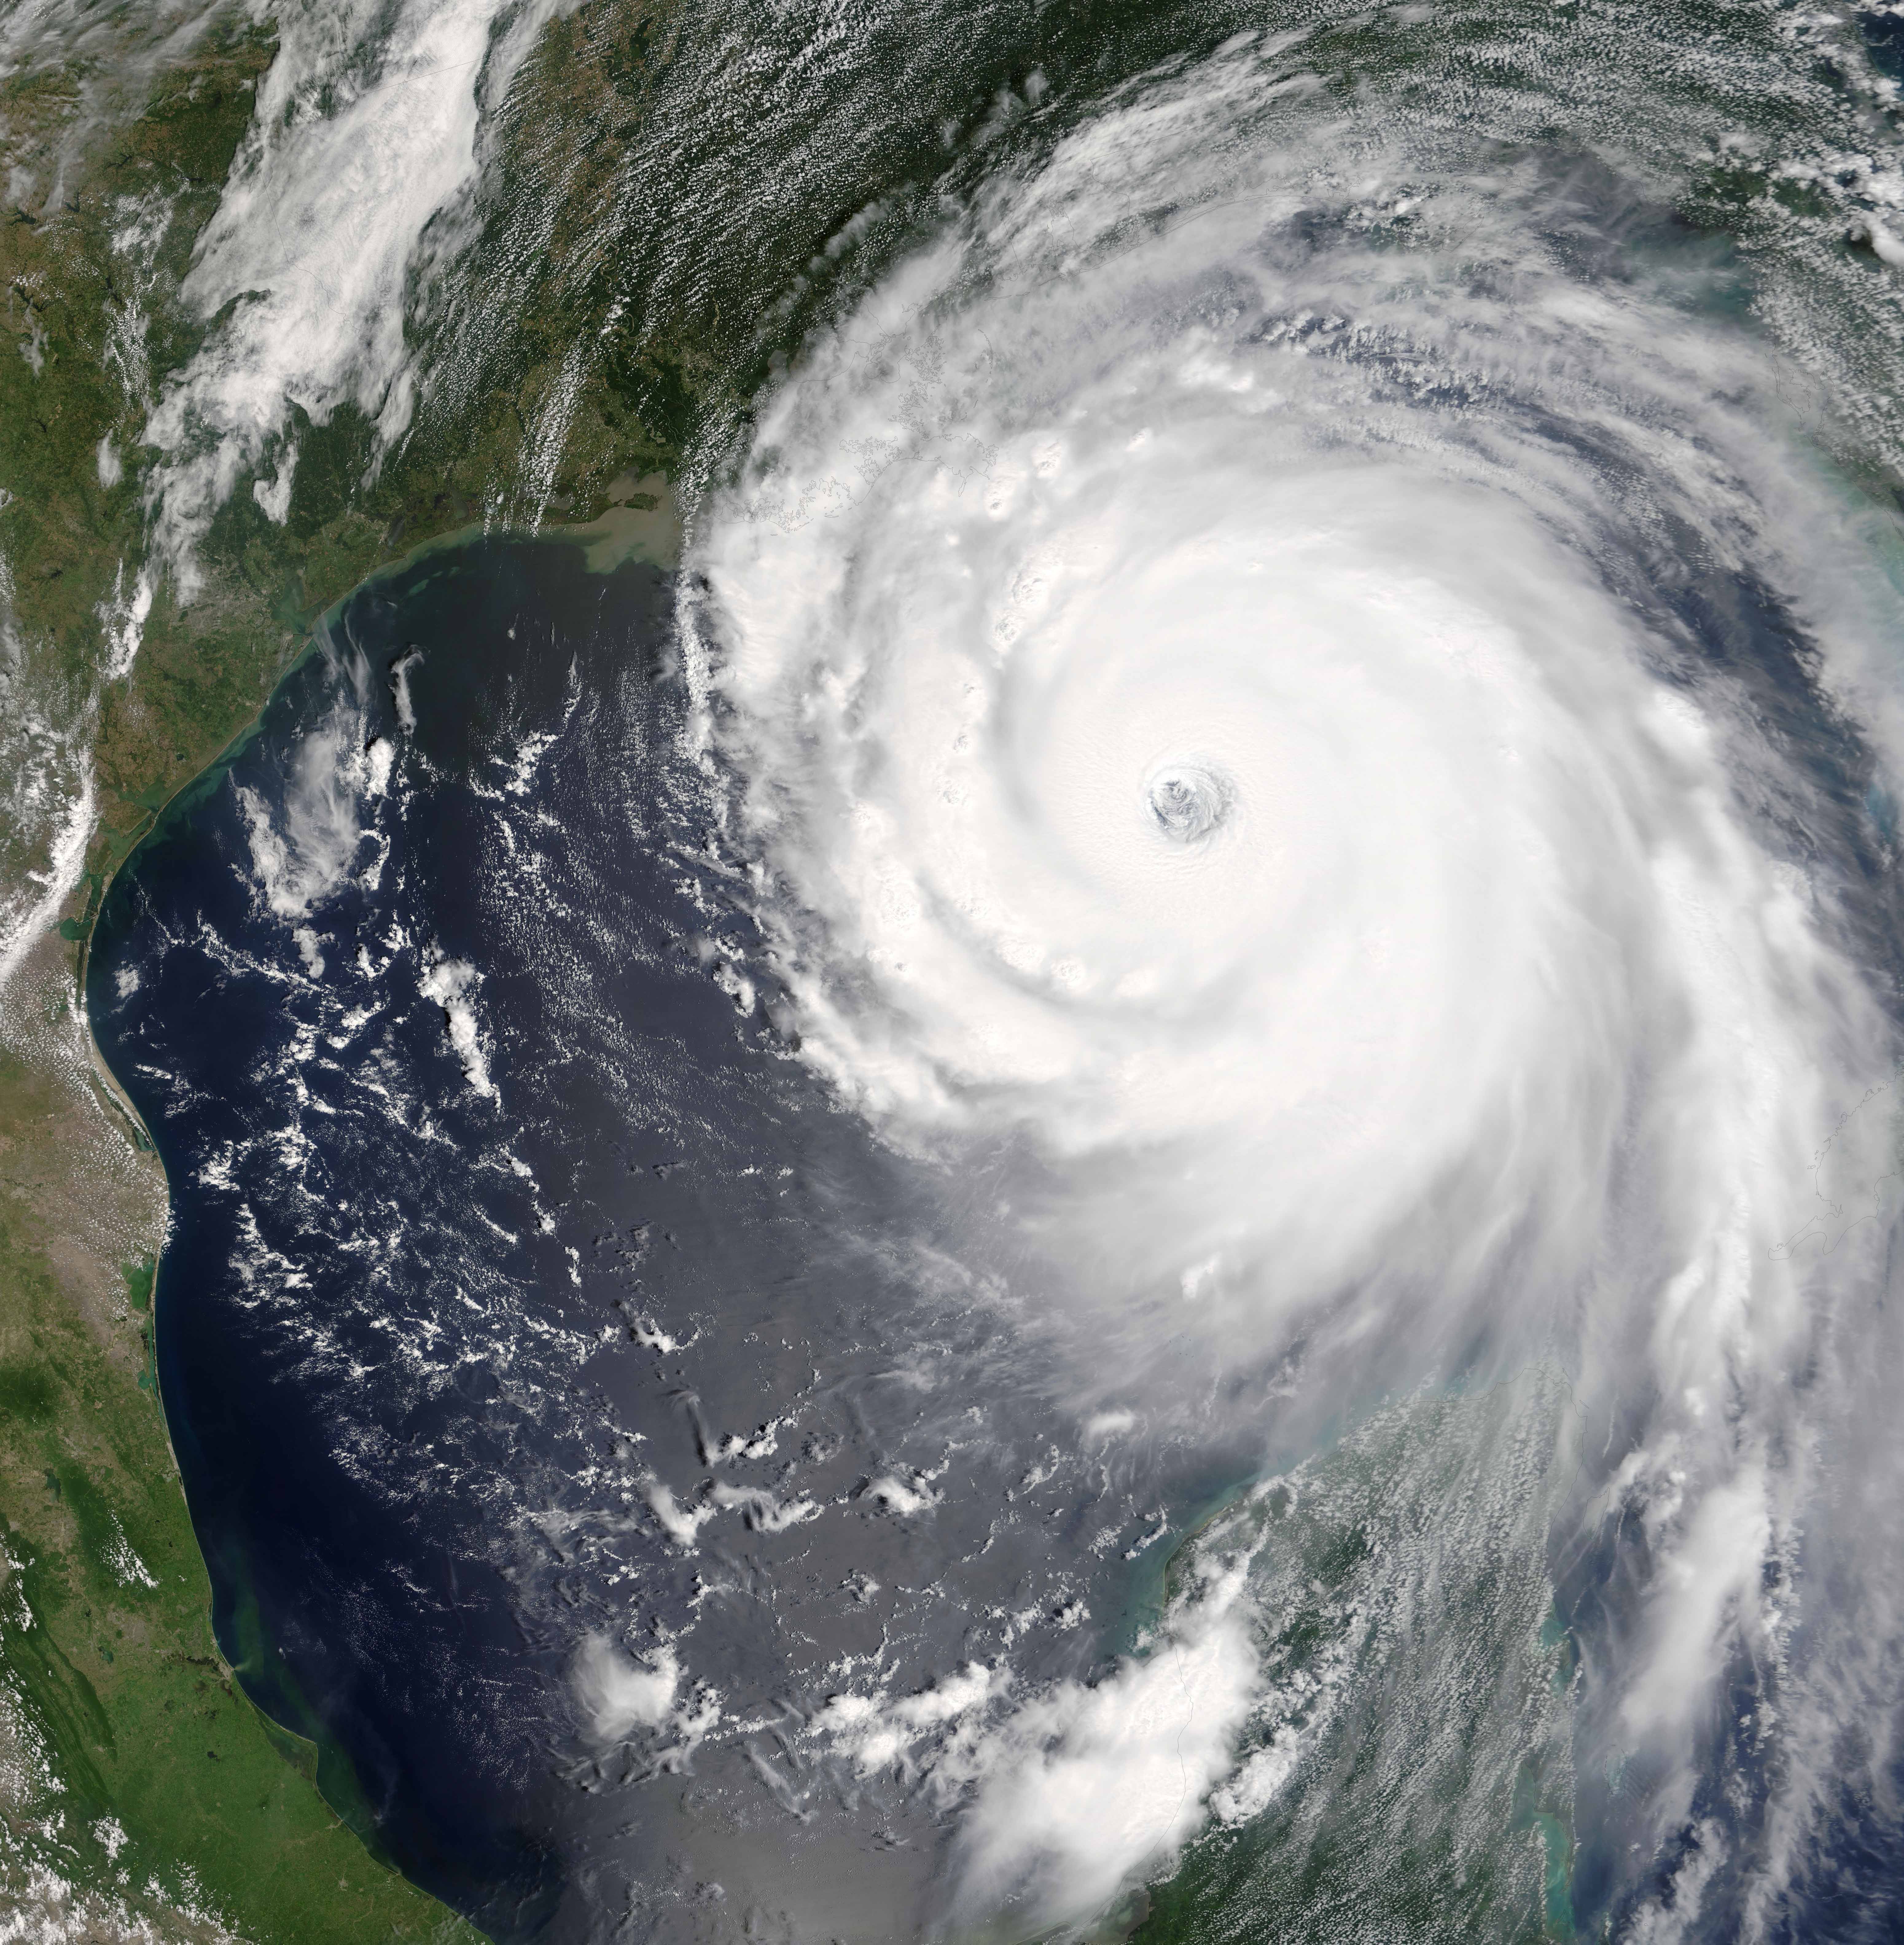 "Hurricane Katrina August 28 2005 NASA" by Jeff Schmaltz, MODIS Rapid Response Team, NASA/GSFC - http://visibleearth.nasa.gov/view_rec.php?id=7938. Licensed under Public Domain via Commons - https://commons.wikimedia.org/wiki/File:Hurricane_Katrina_August_28_2005_NASA.jpg#/media/File:Hurricane_Katrina_August_28_2005_NASA.jpg